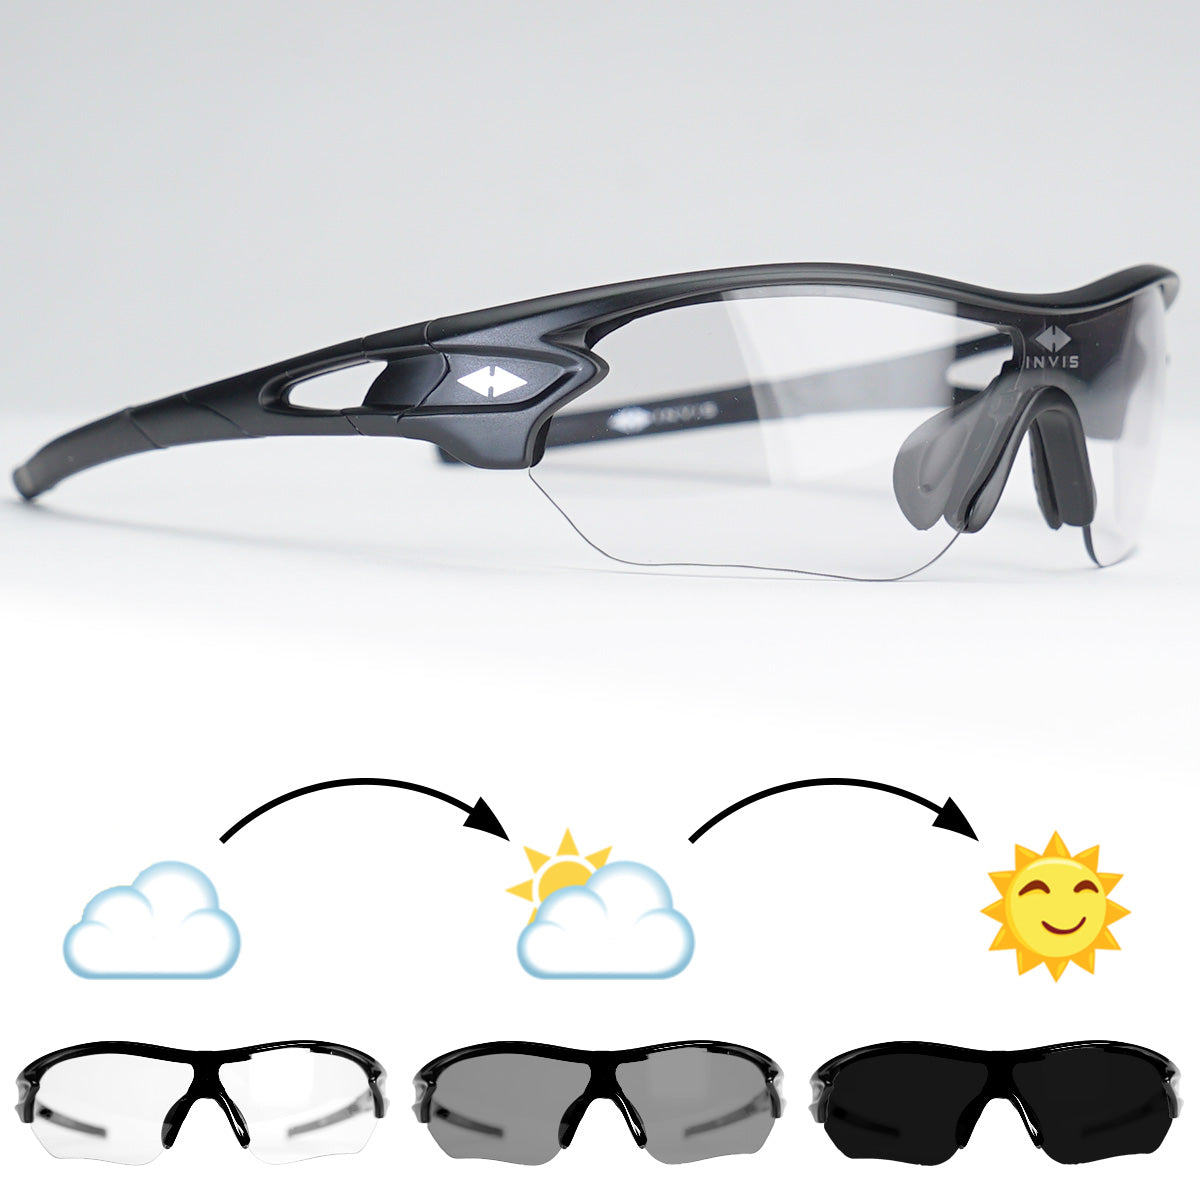 Bicycle Glasses Cycling Sunglasses Running Sports Eyewear Set W/5